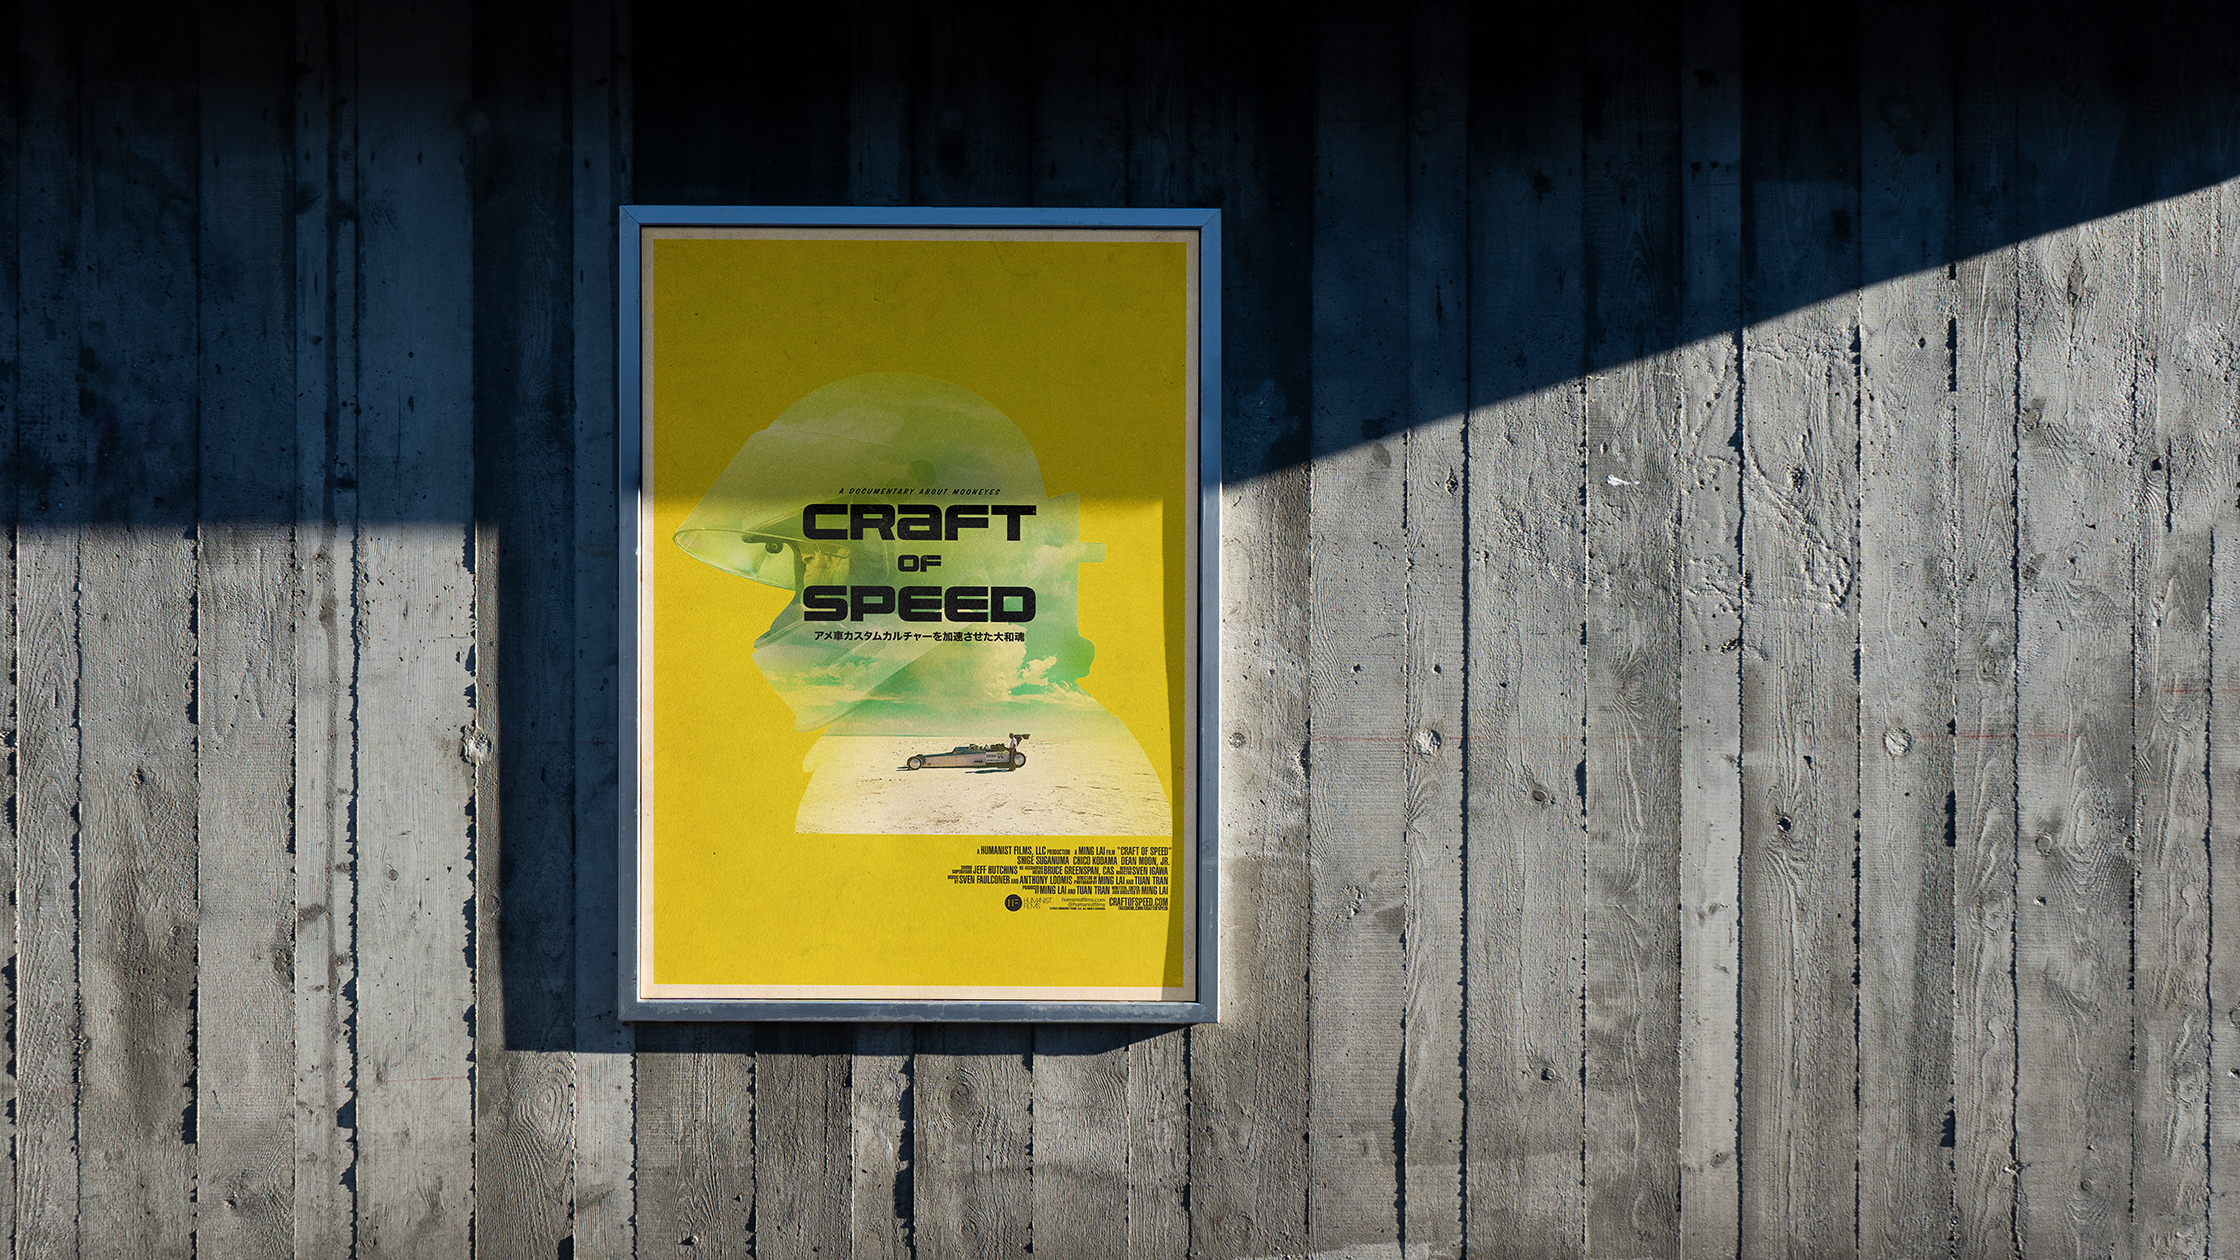 Craft of Speed documentary key art poster